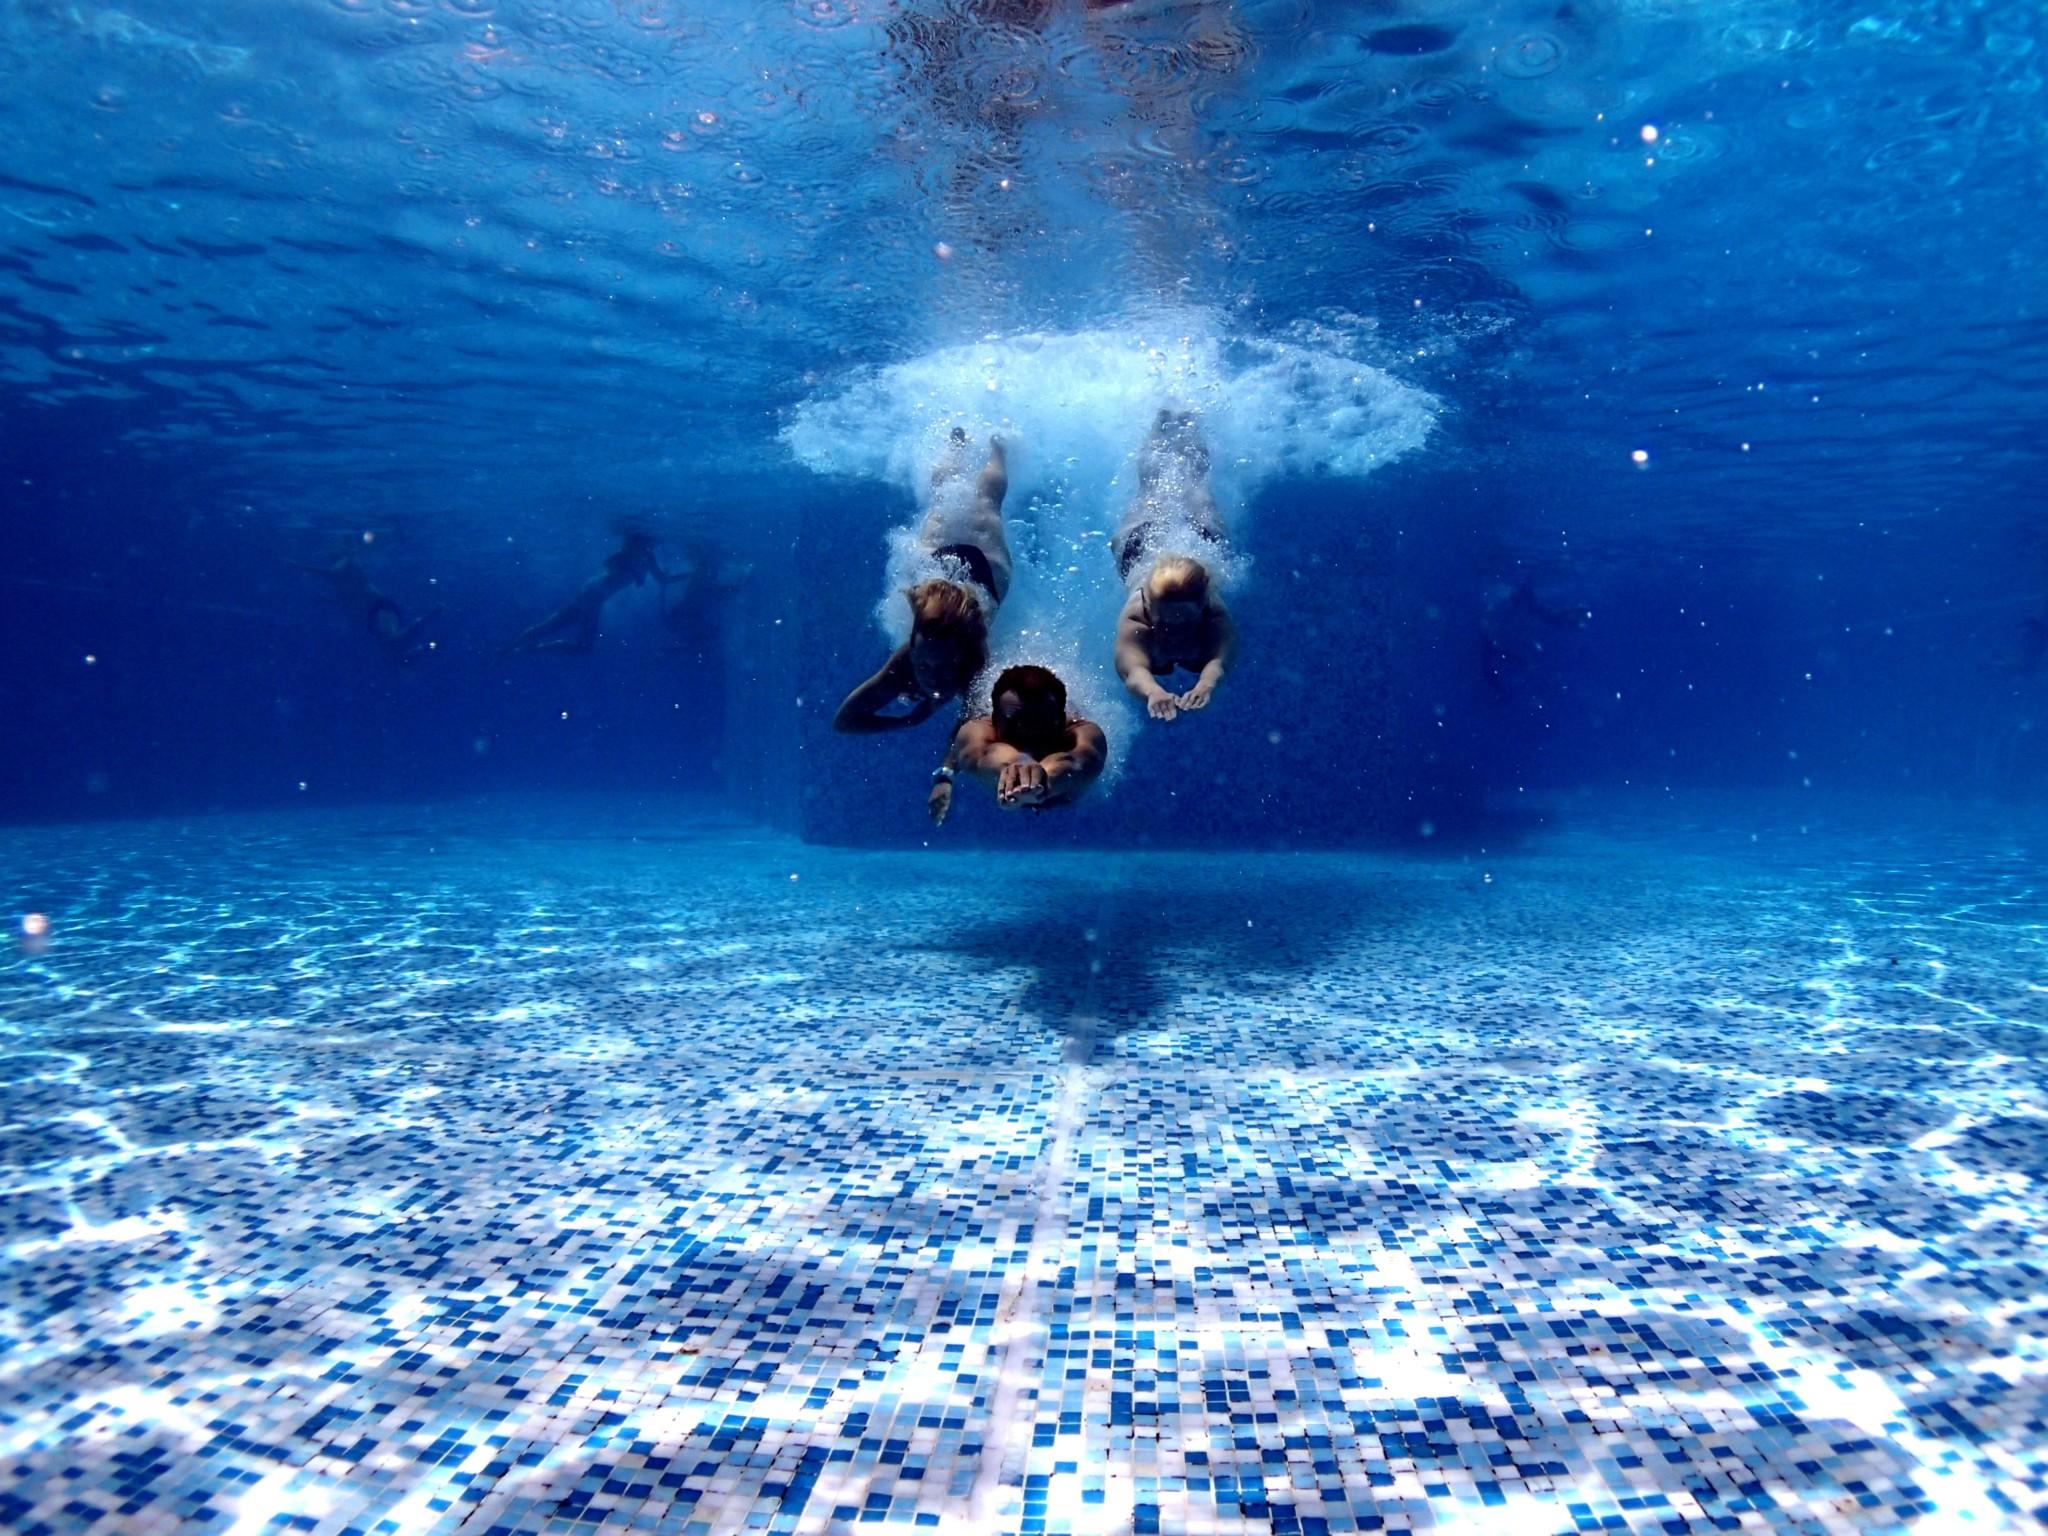 three people diving into water pool - Sensorex